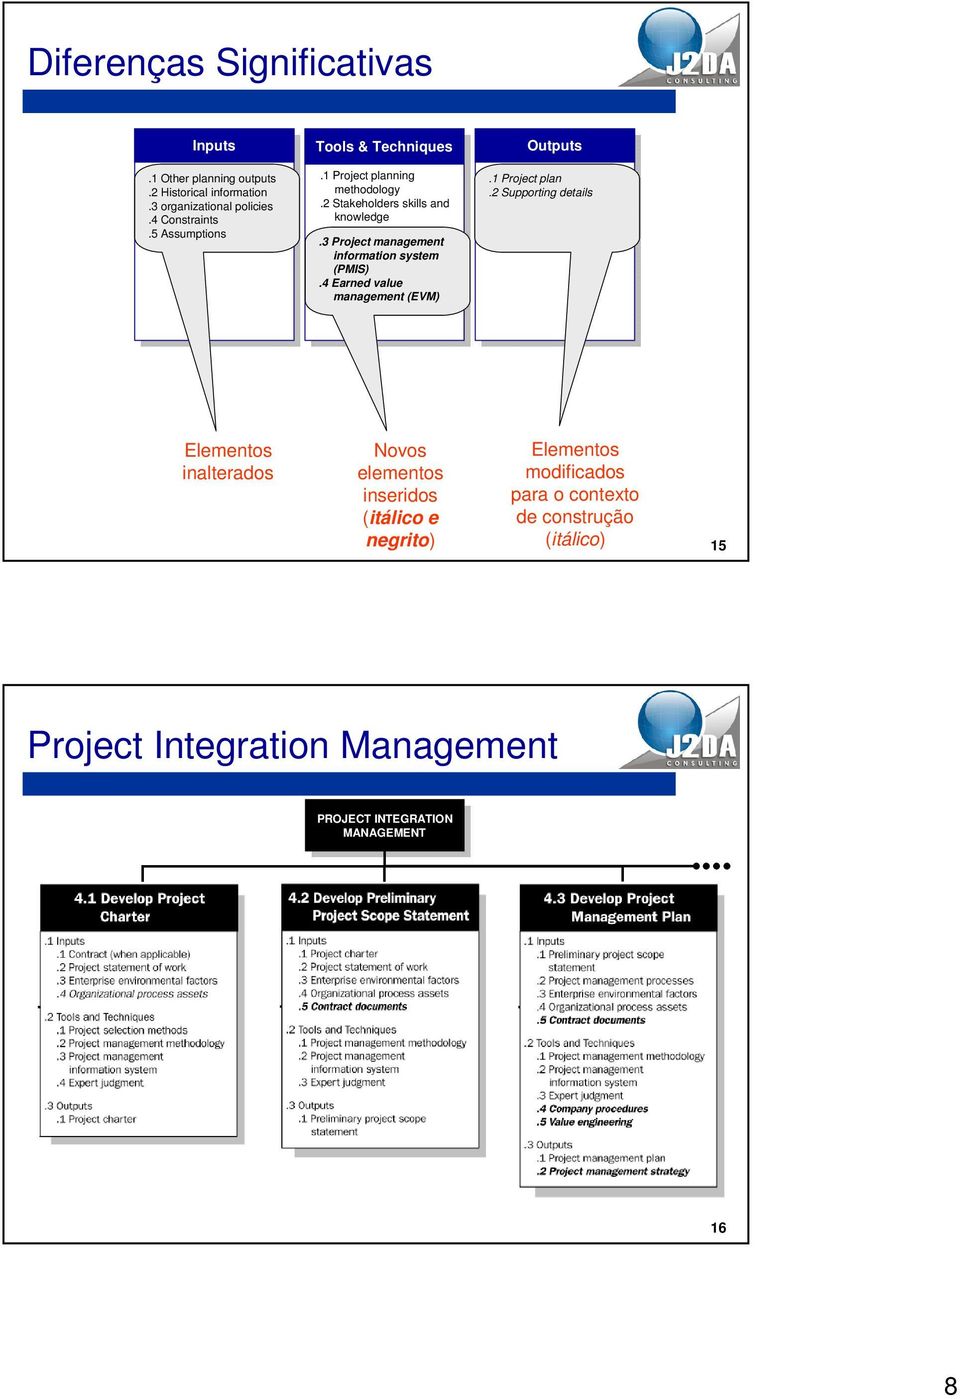 3 Project management information system (PMIS).4 Earned value management (EVM).1 Project plan.